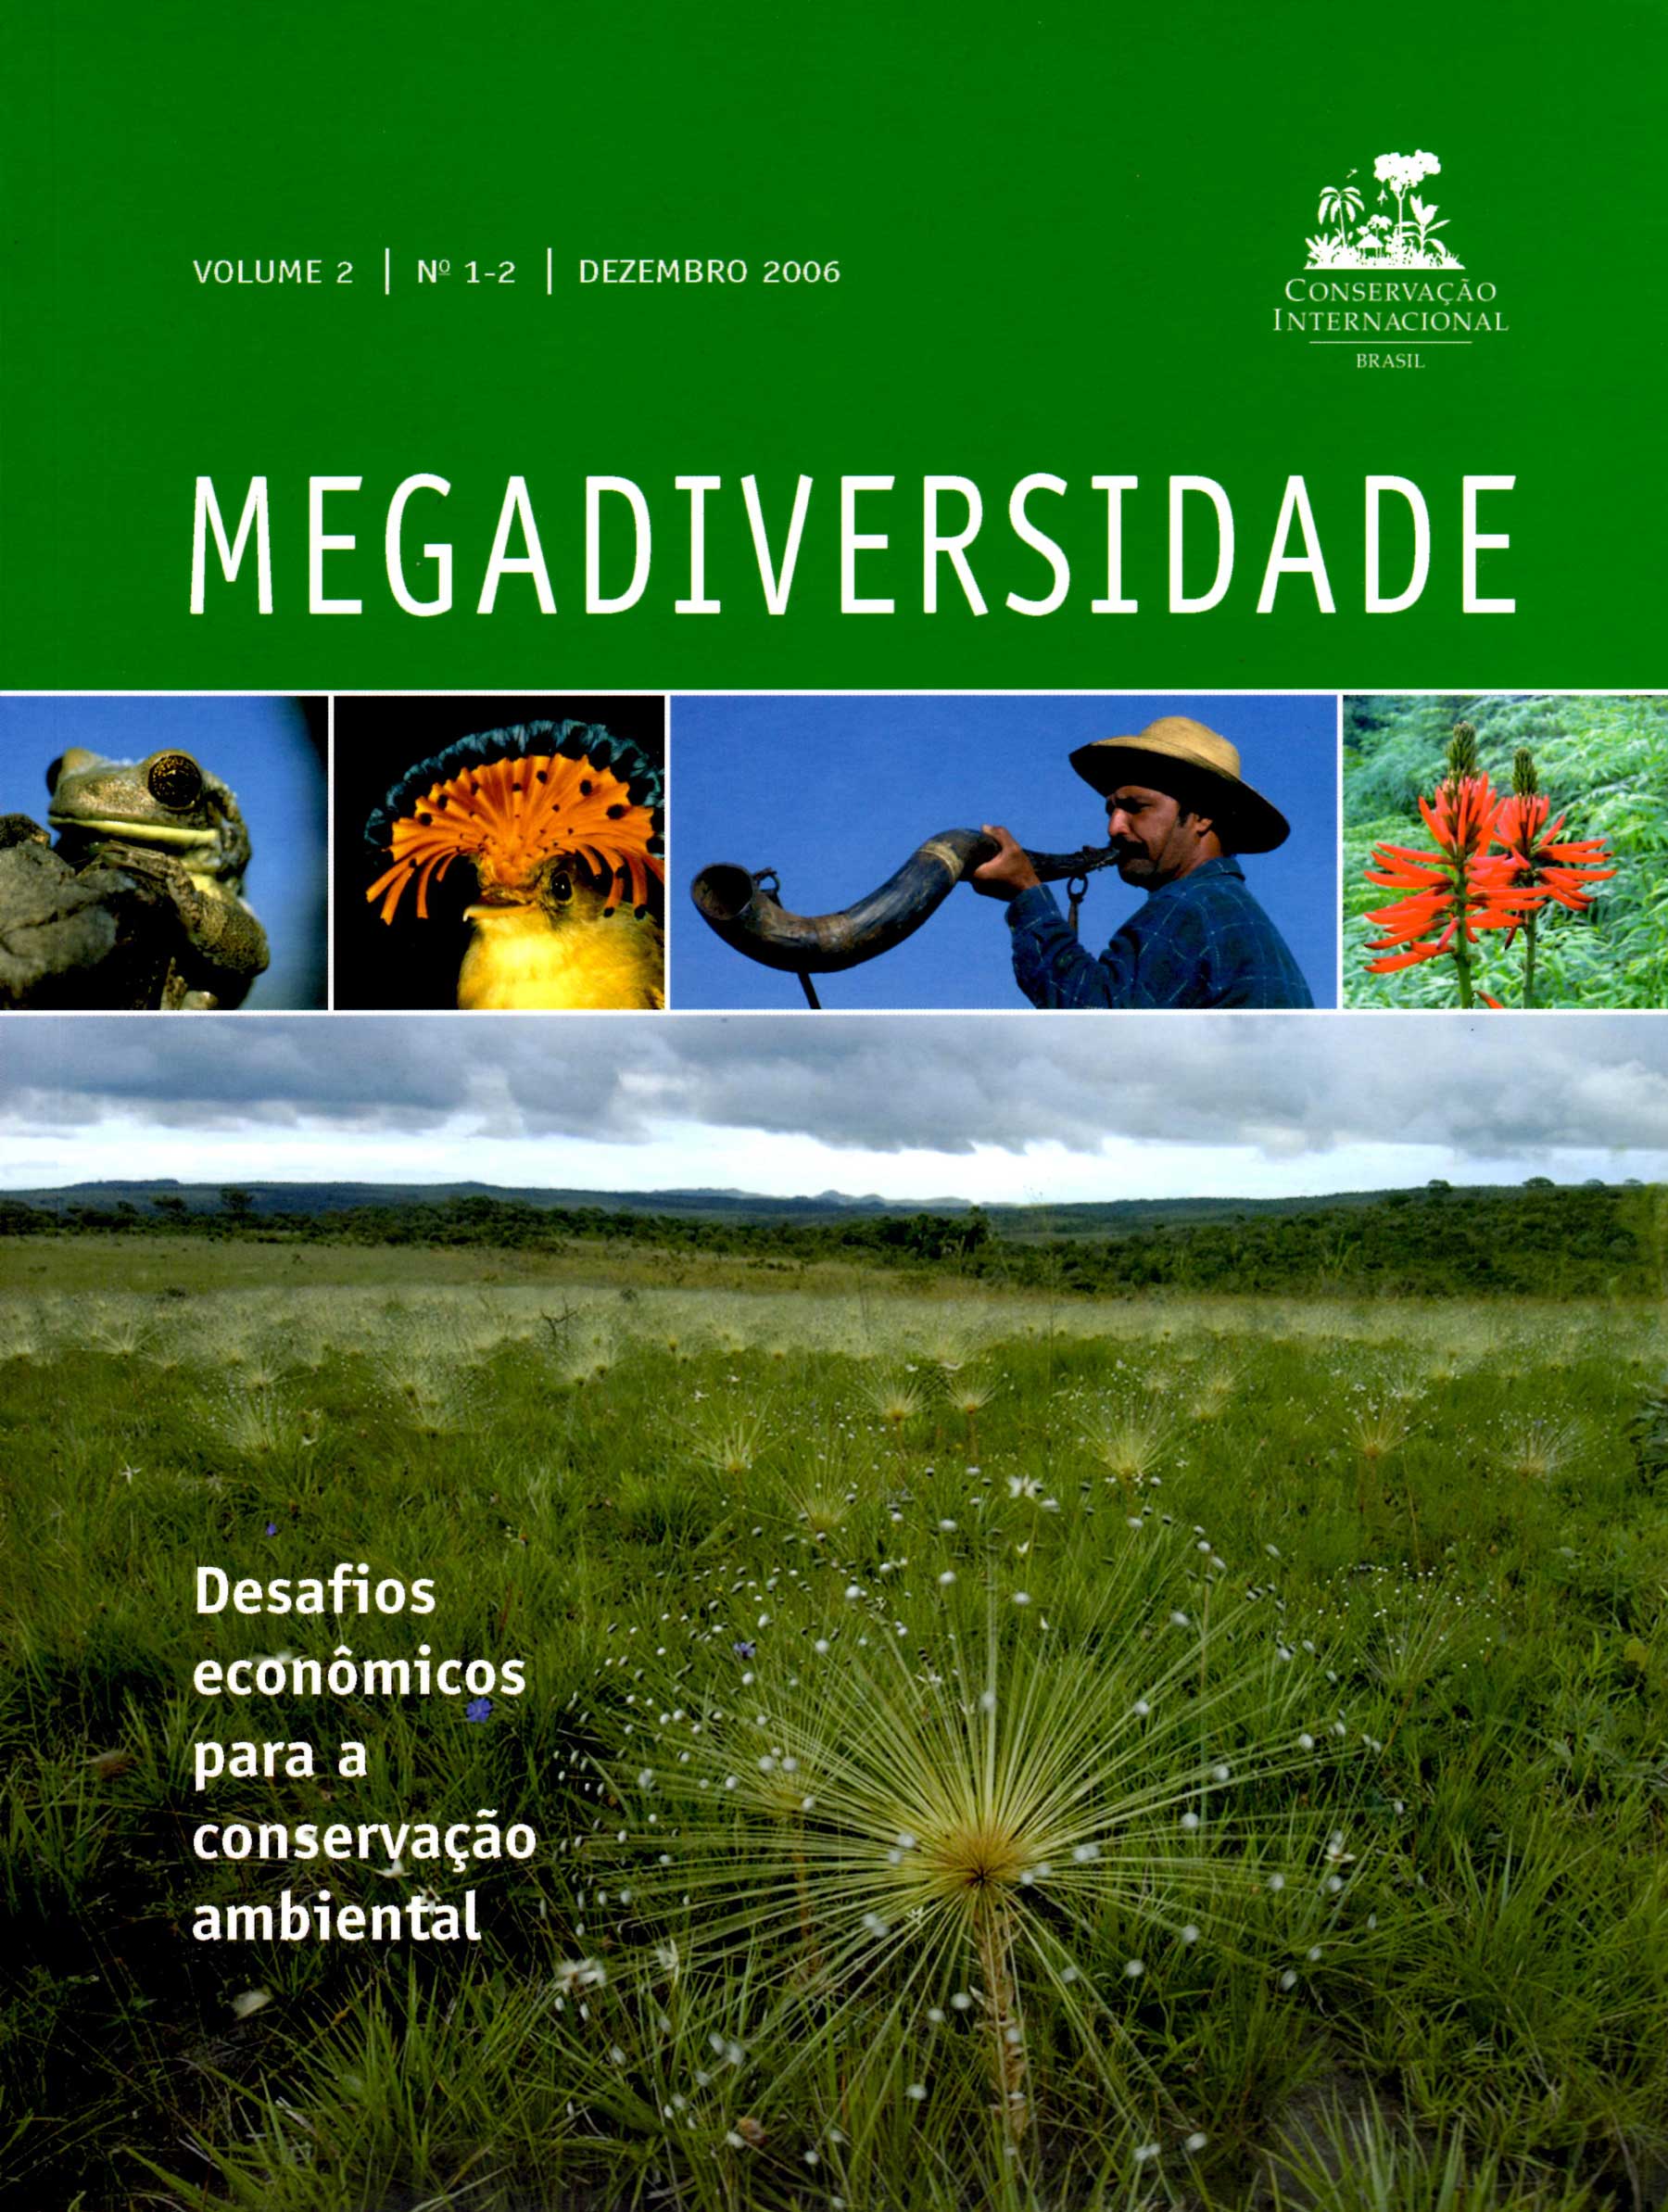 Front cover of Megadiversidade magazine